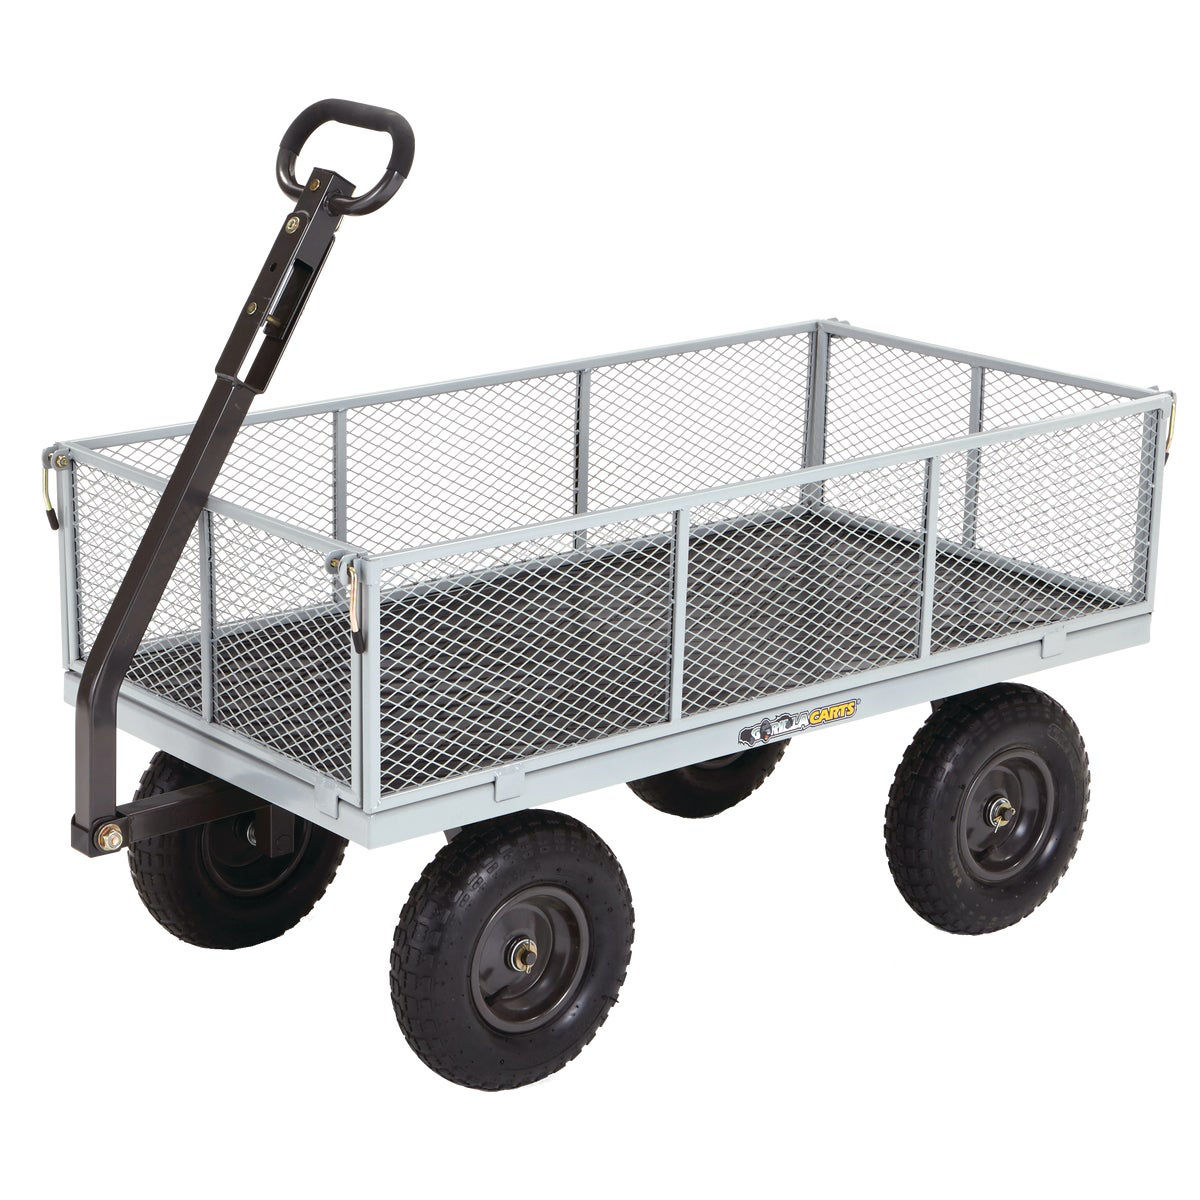 Gorilla Carts 6-cu ft Steel Yard Cart at